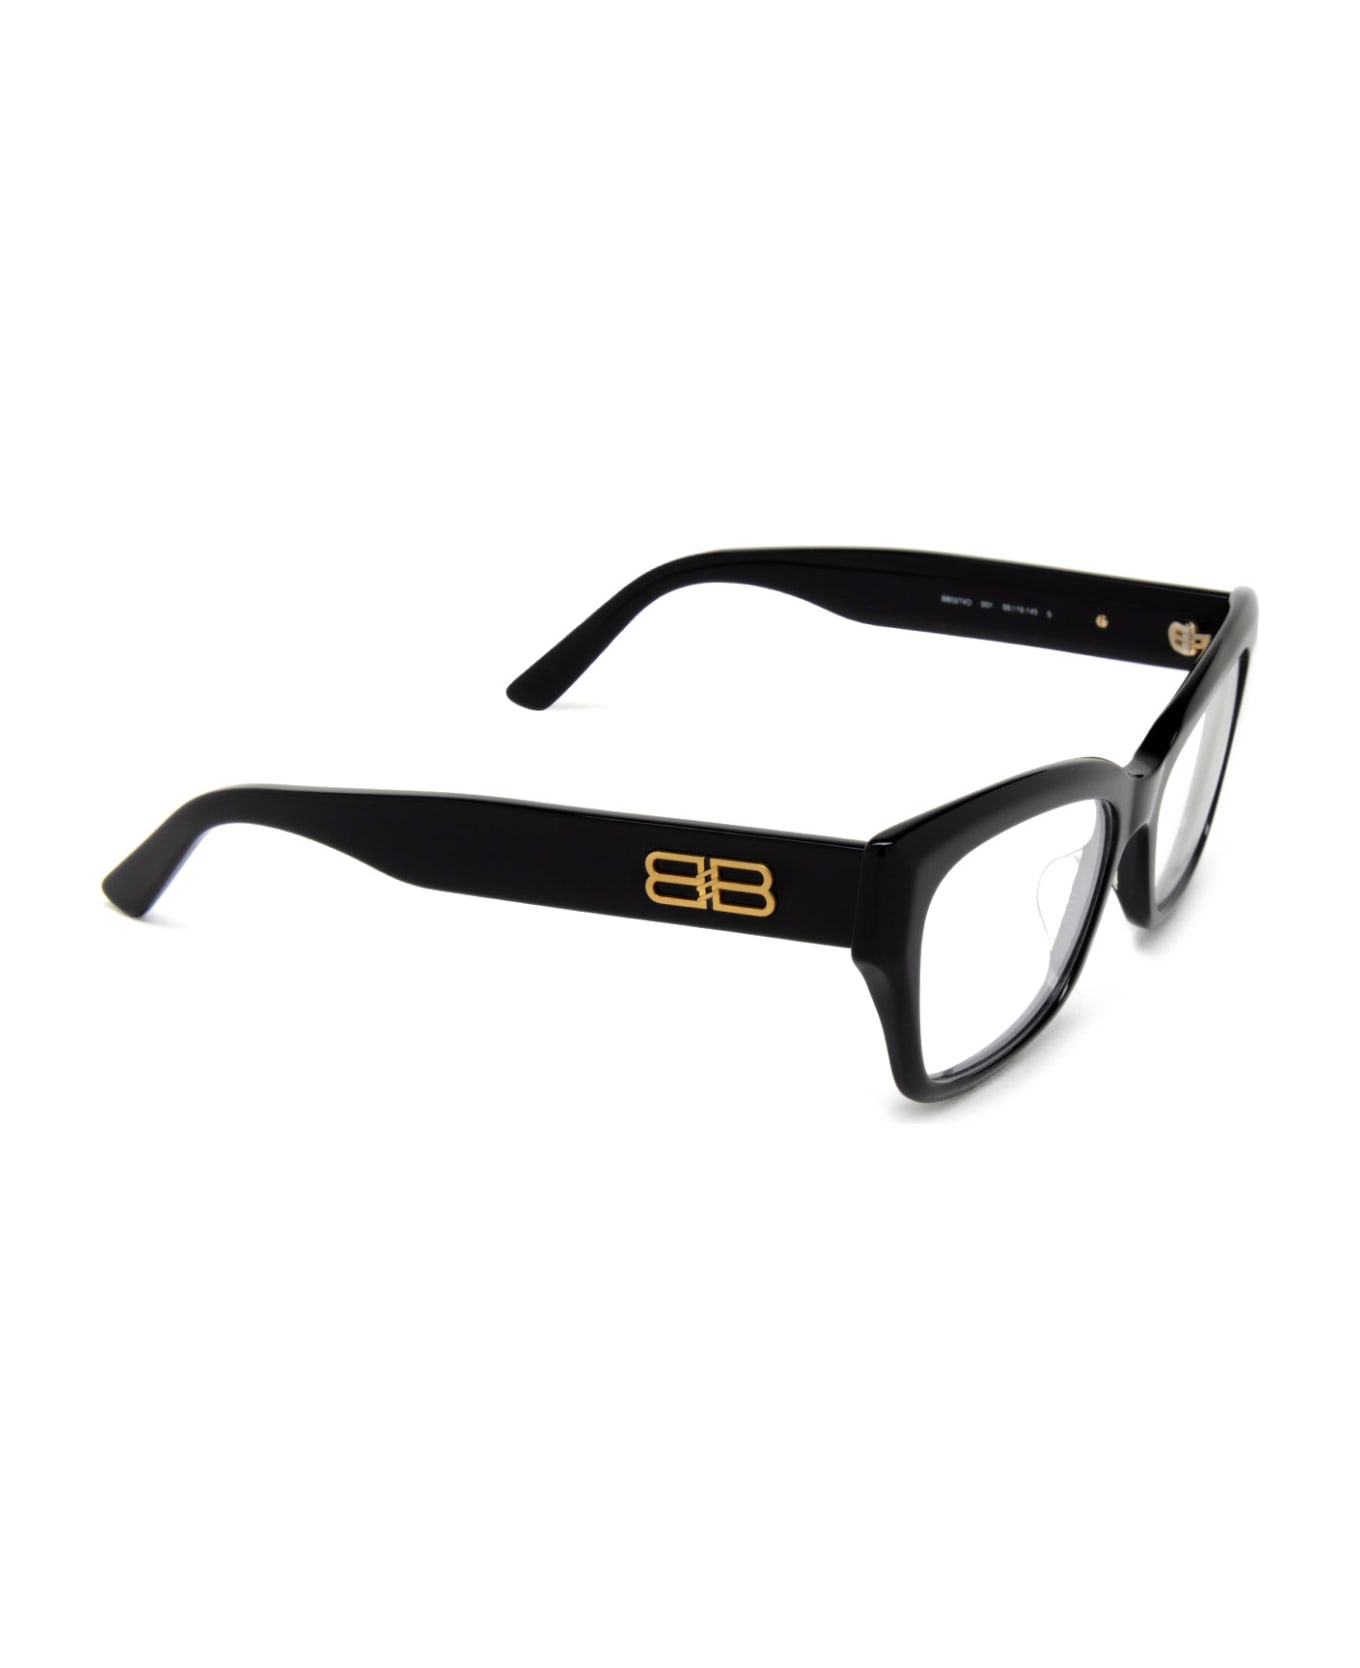 Balenciaga Eyewear Bb0274o Glasses - 001 BLACK BLACK TRANSPARENT